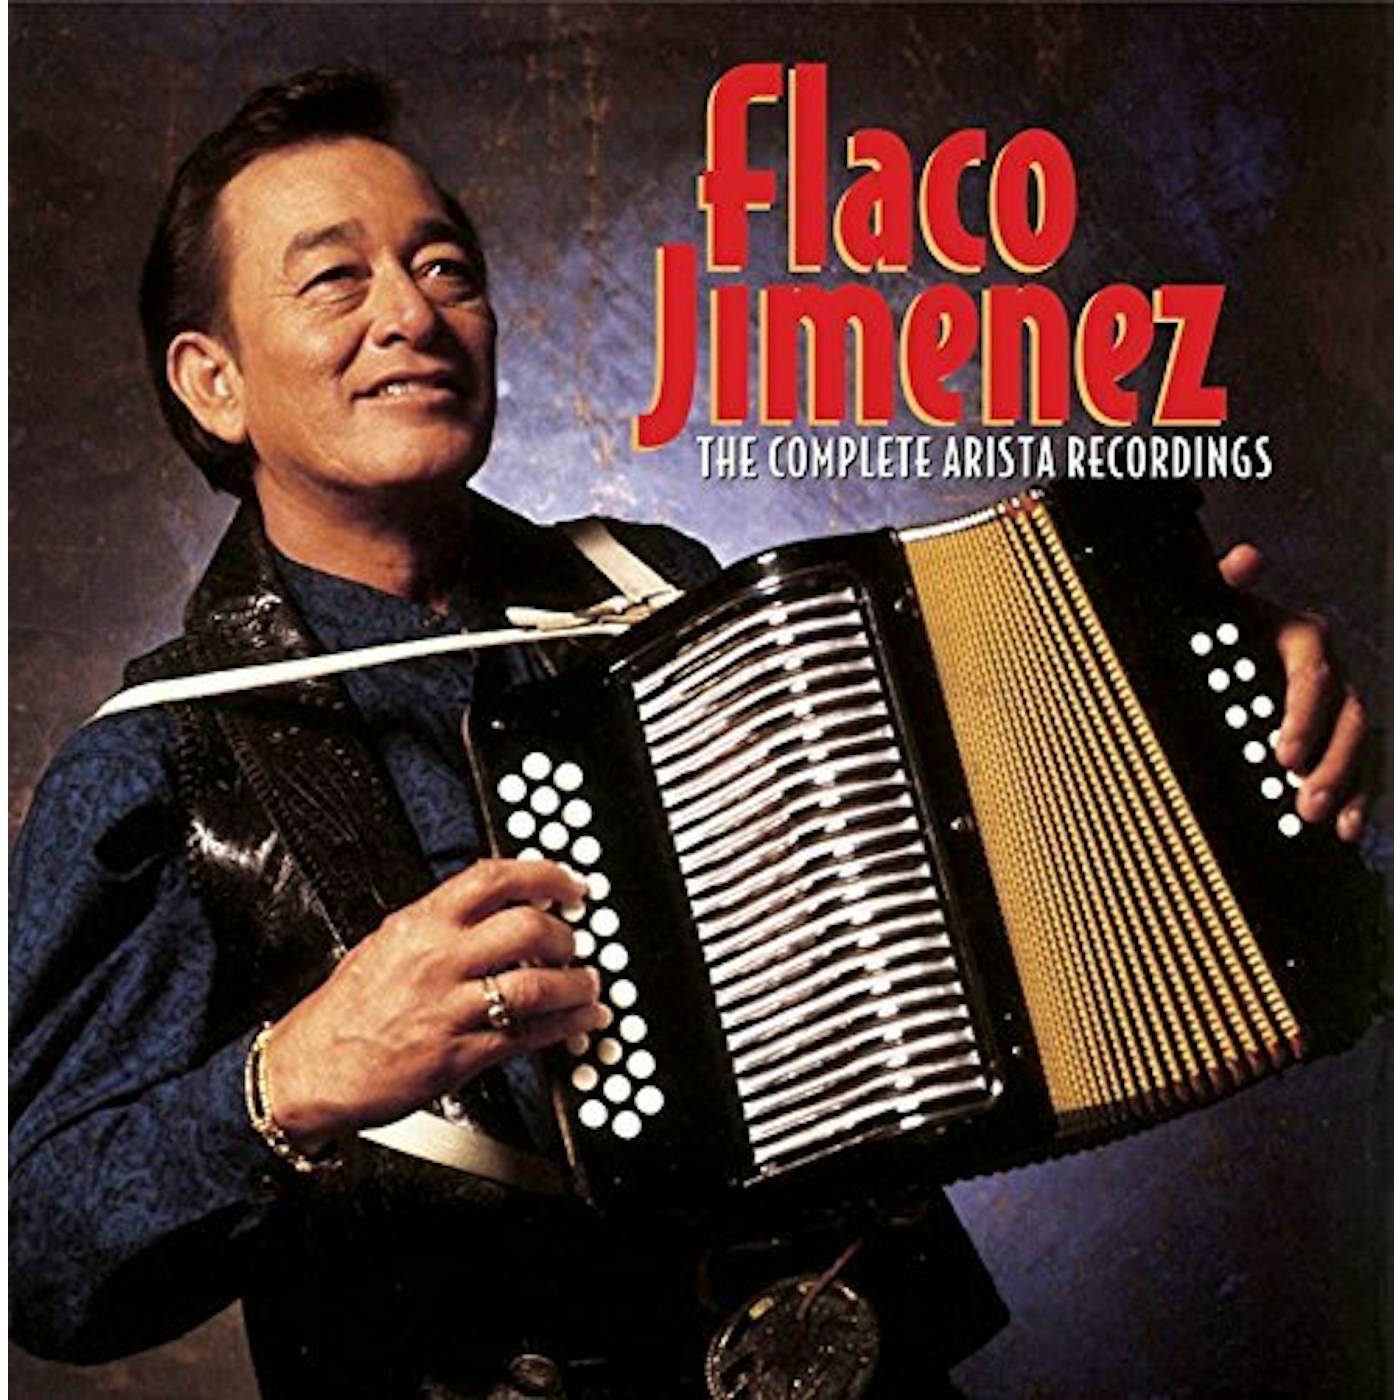 Flaco Jimenez COMPLETE ARISTA RECORDINGS CD